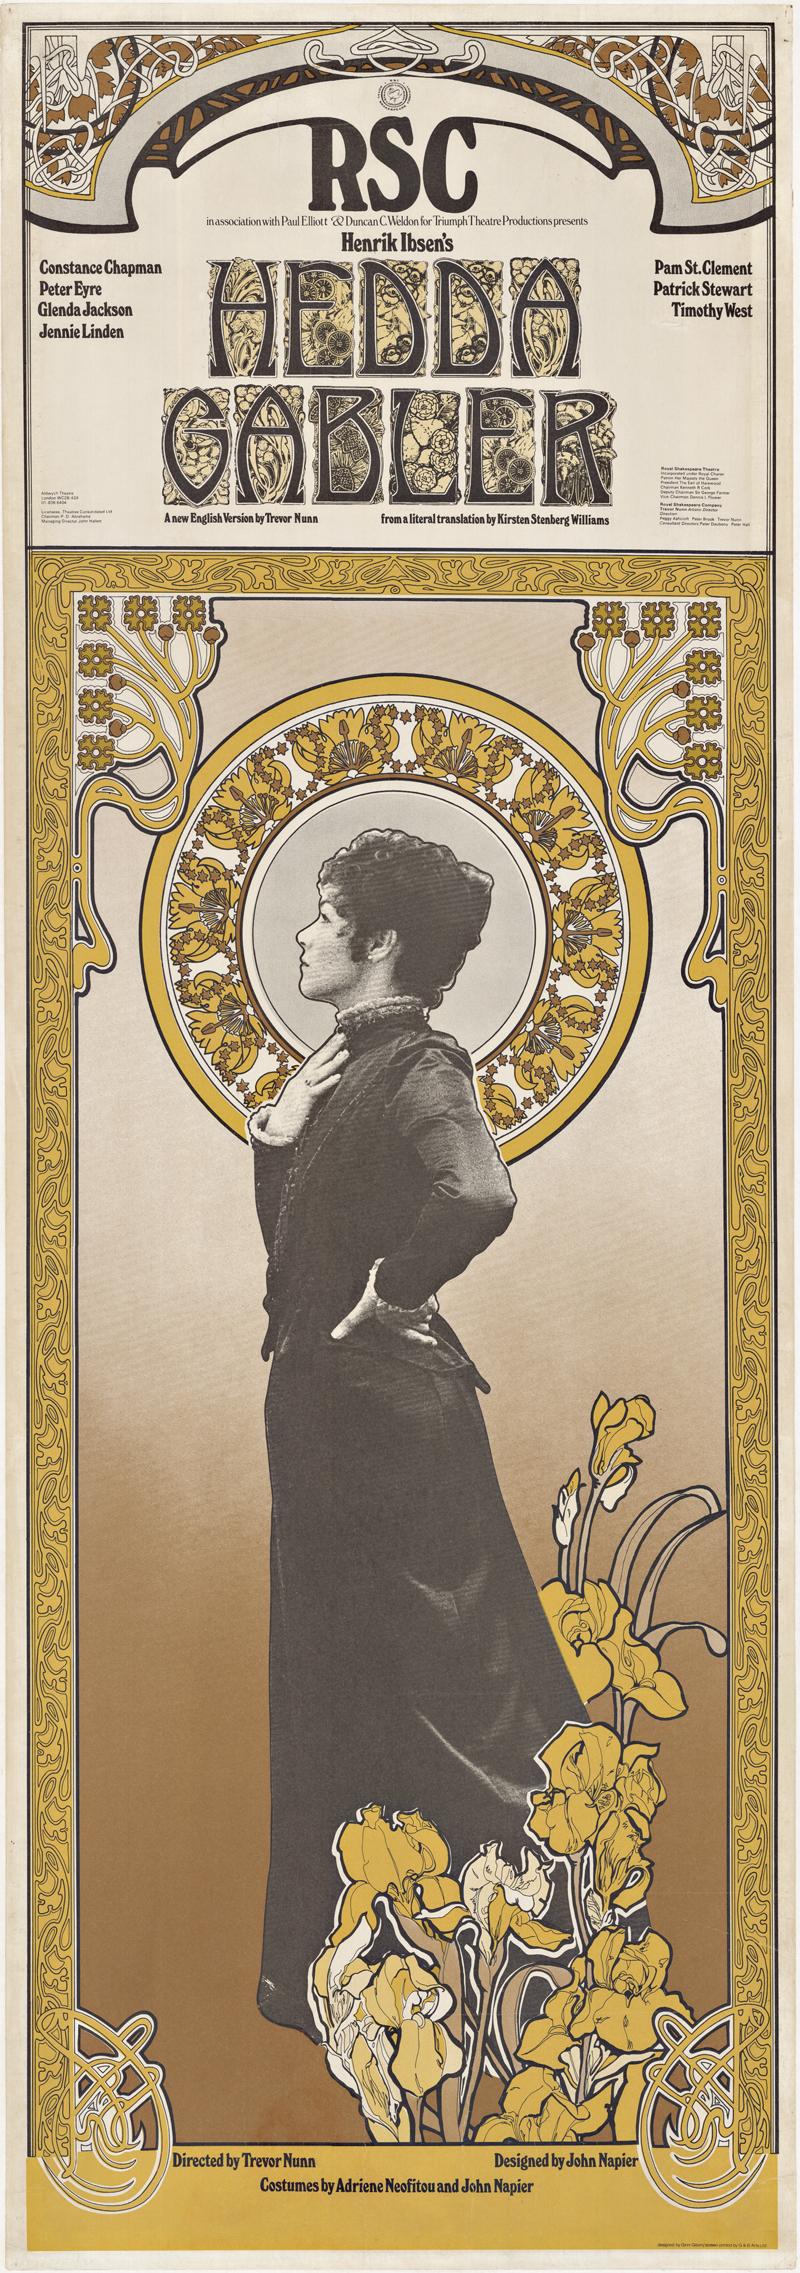 Unknown Print - Hedda Gabler original British theater or stage poster